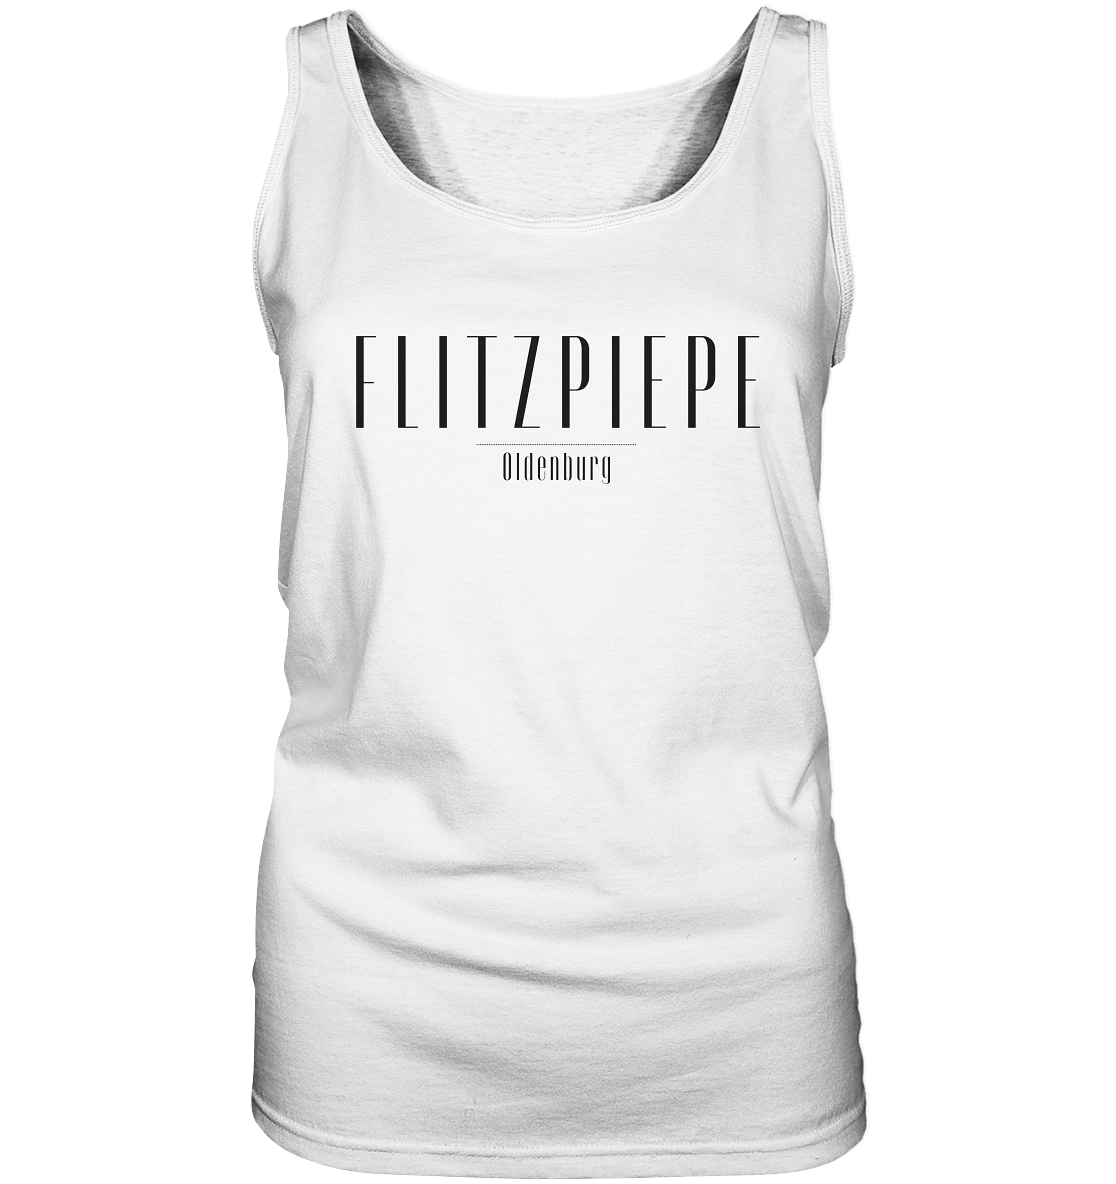 FLITZPIEPE - Ladies Tank-Top